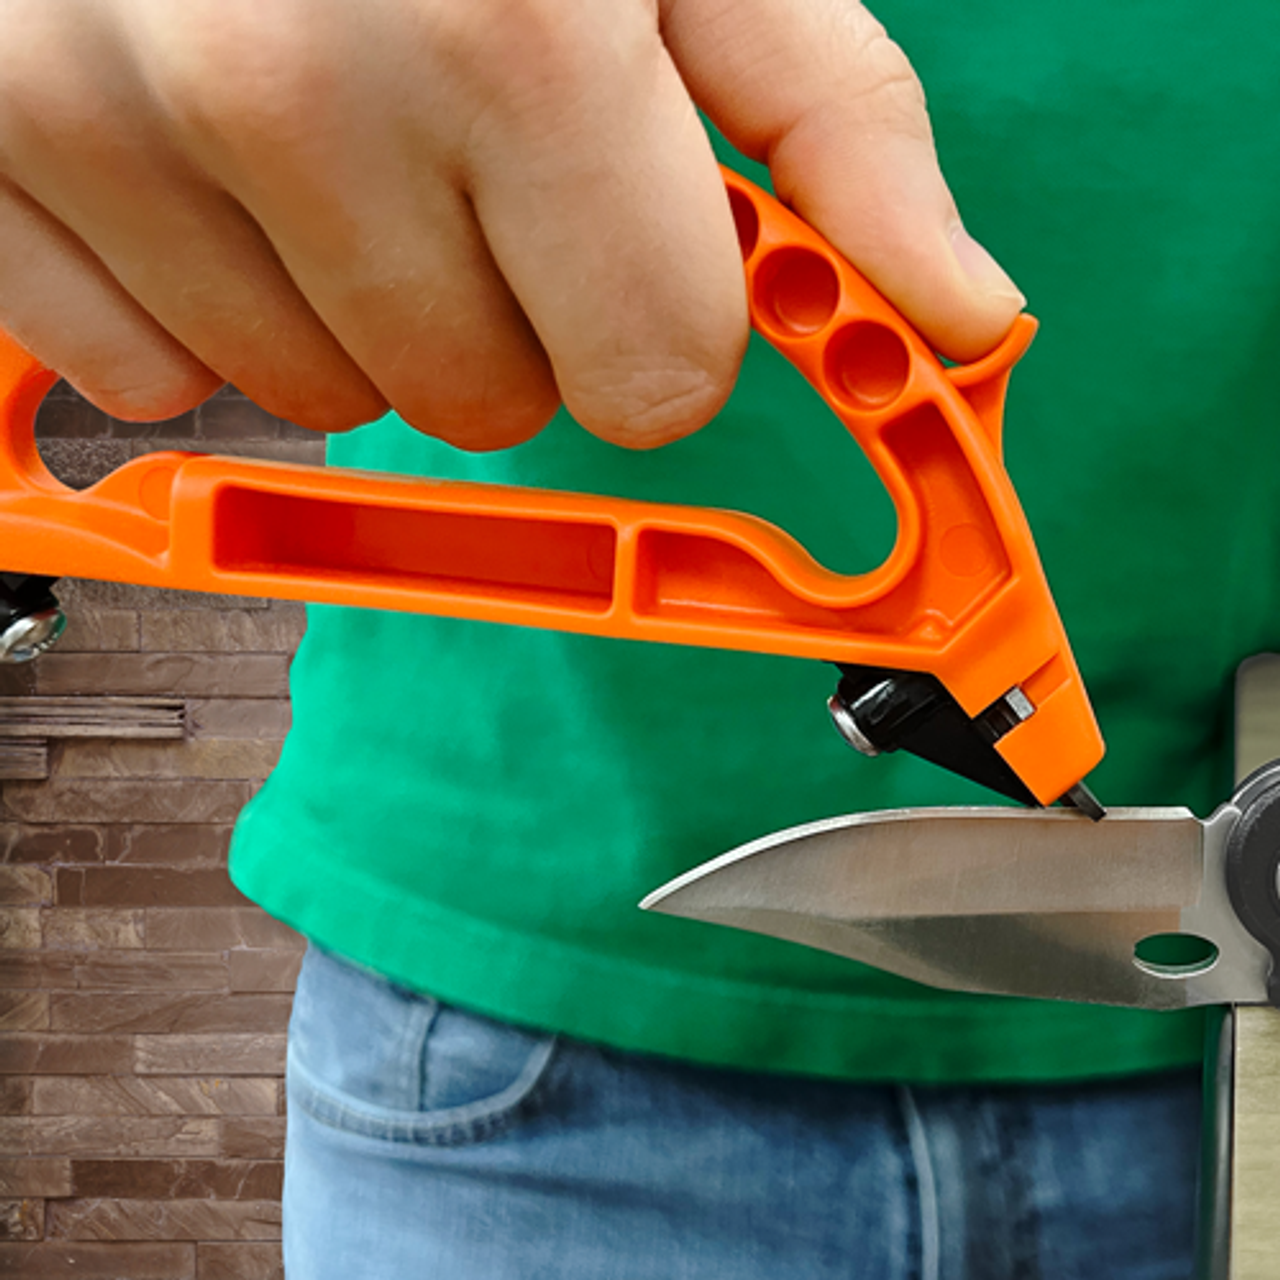 AccuSharp All In 1 Pruner, Knife, and Tool Sharpener, Orange